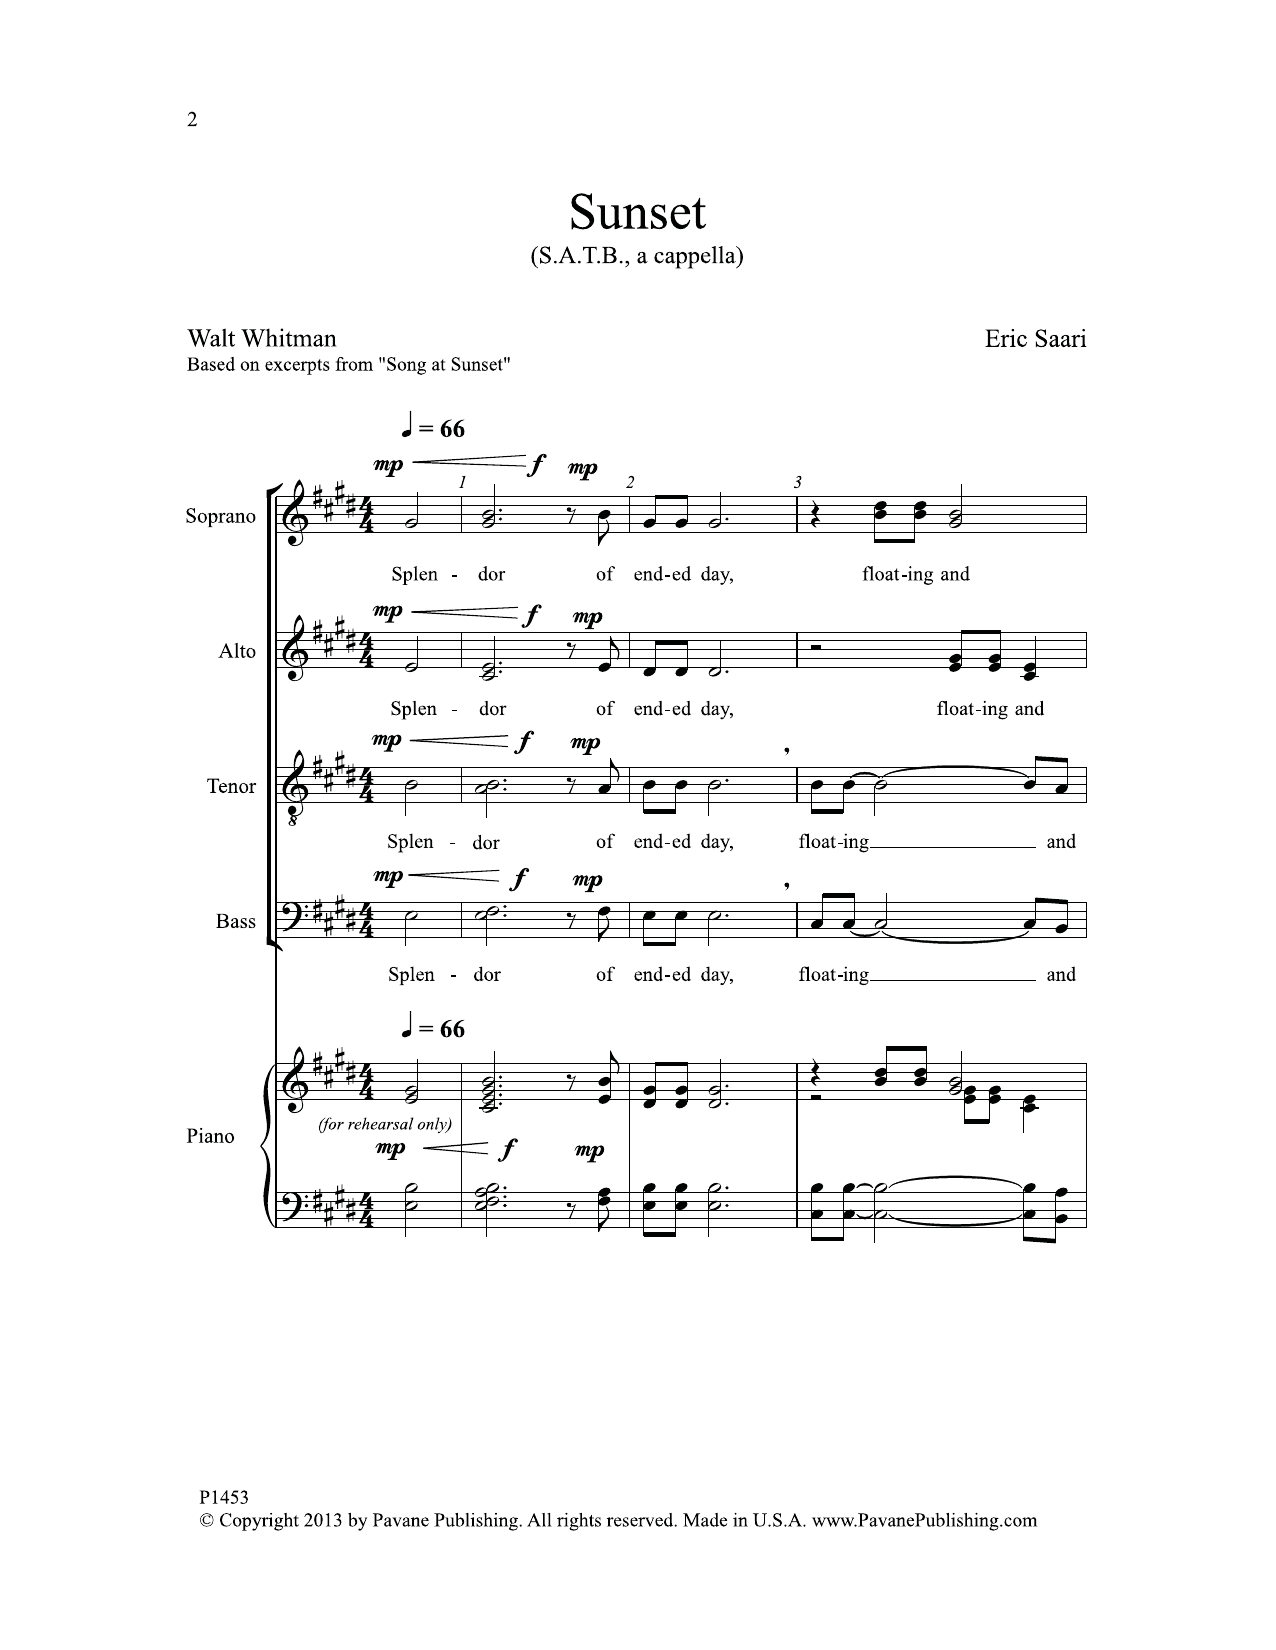 Eric Saari Sunset Sheet Music Notes & Chords for Choral - Download or Print PDF